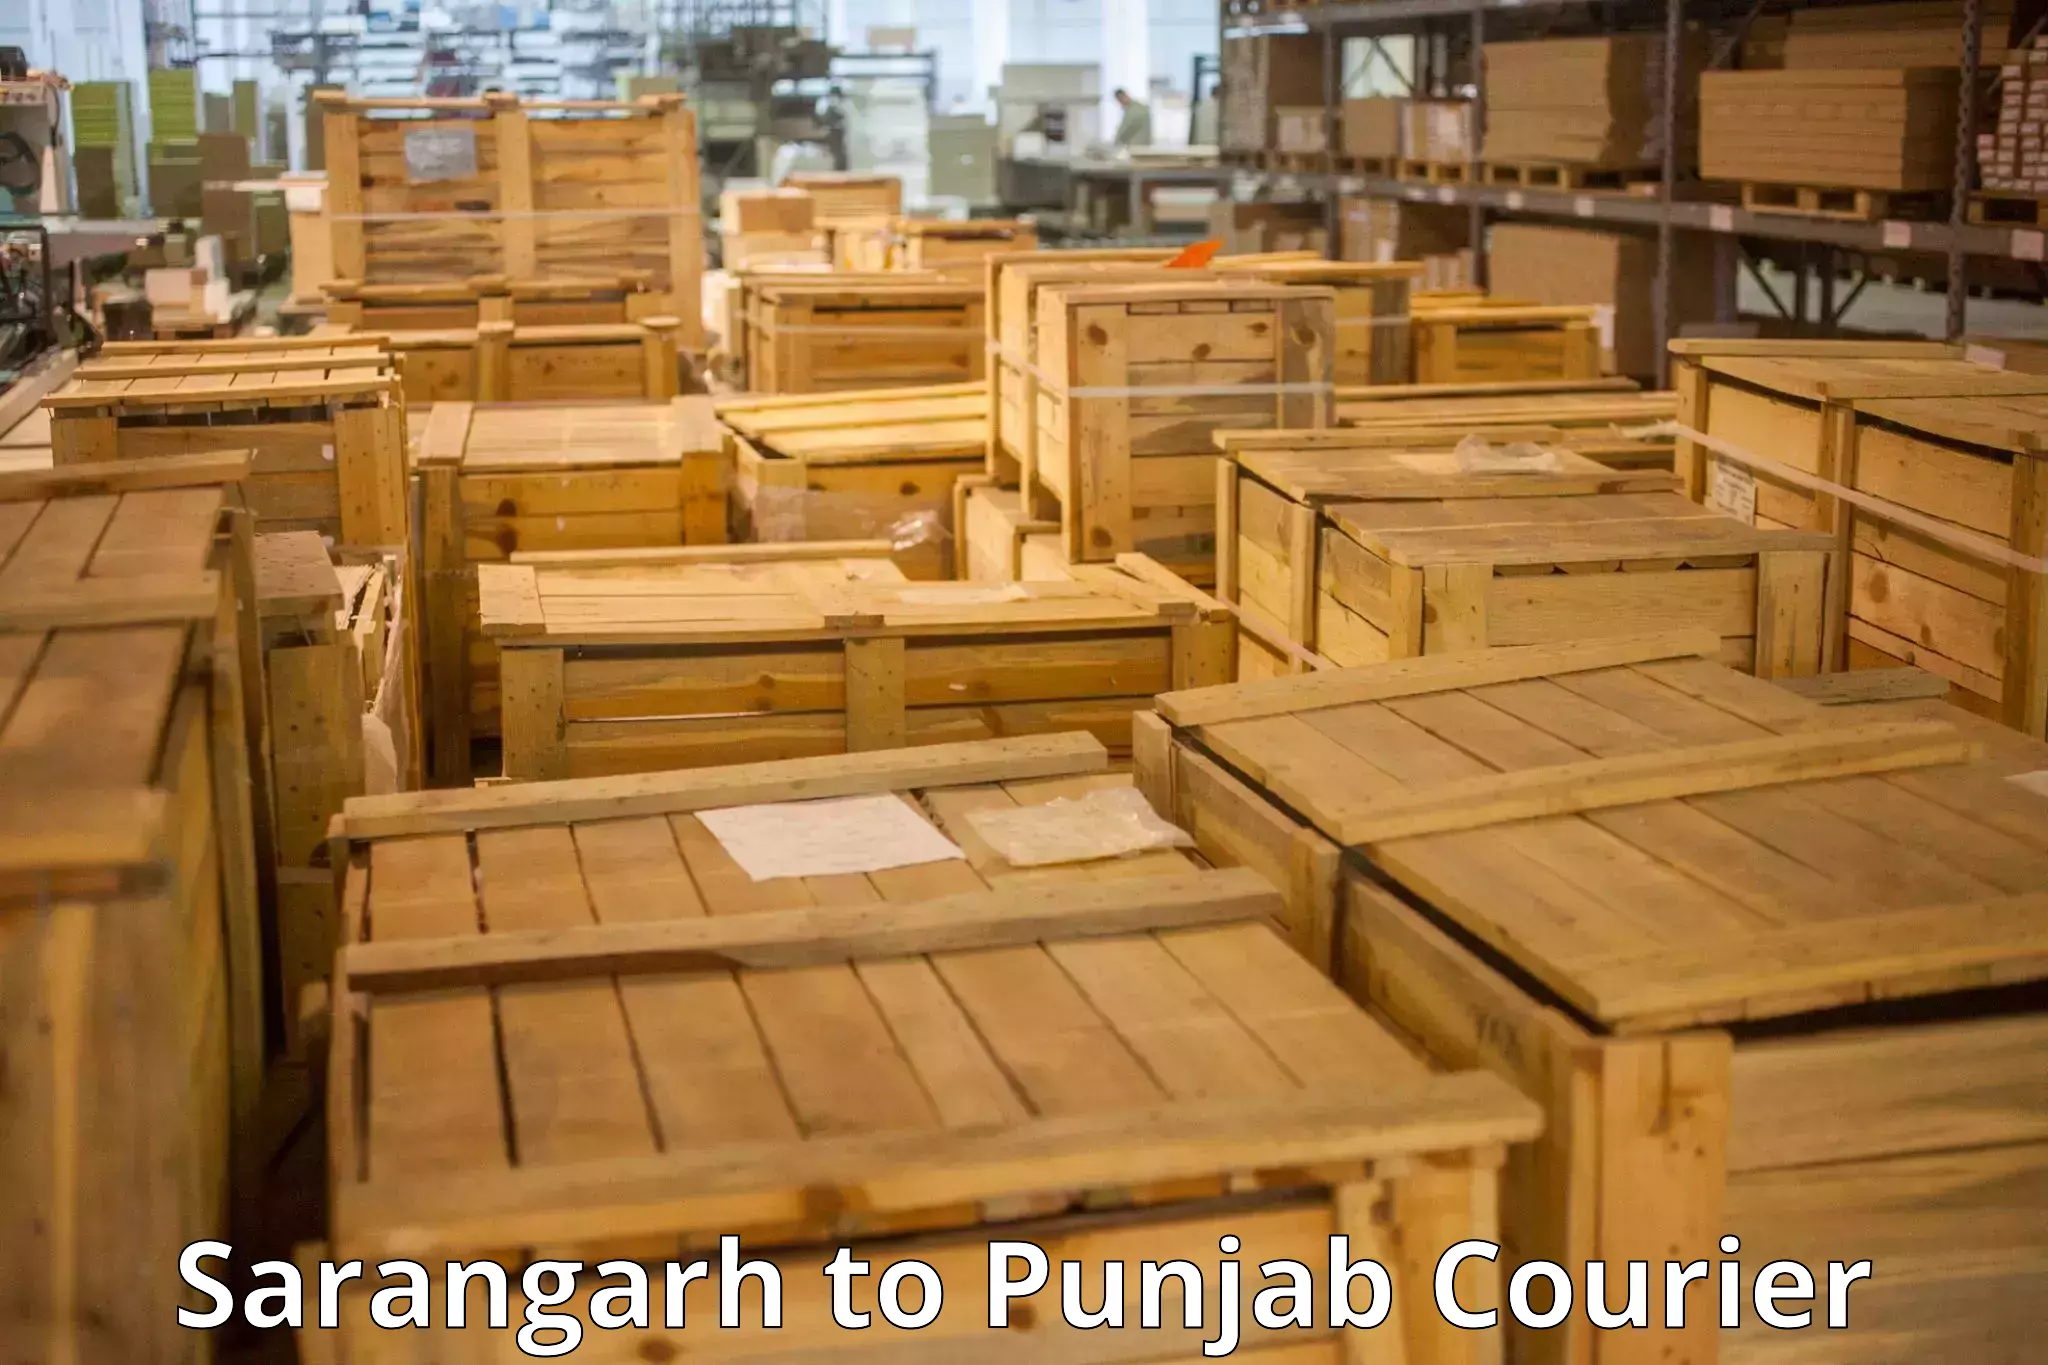 Luggage delivery network Sarangarh to Zirakpur